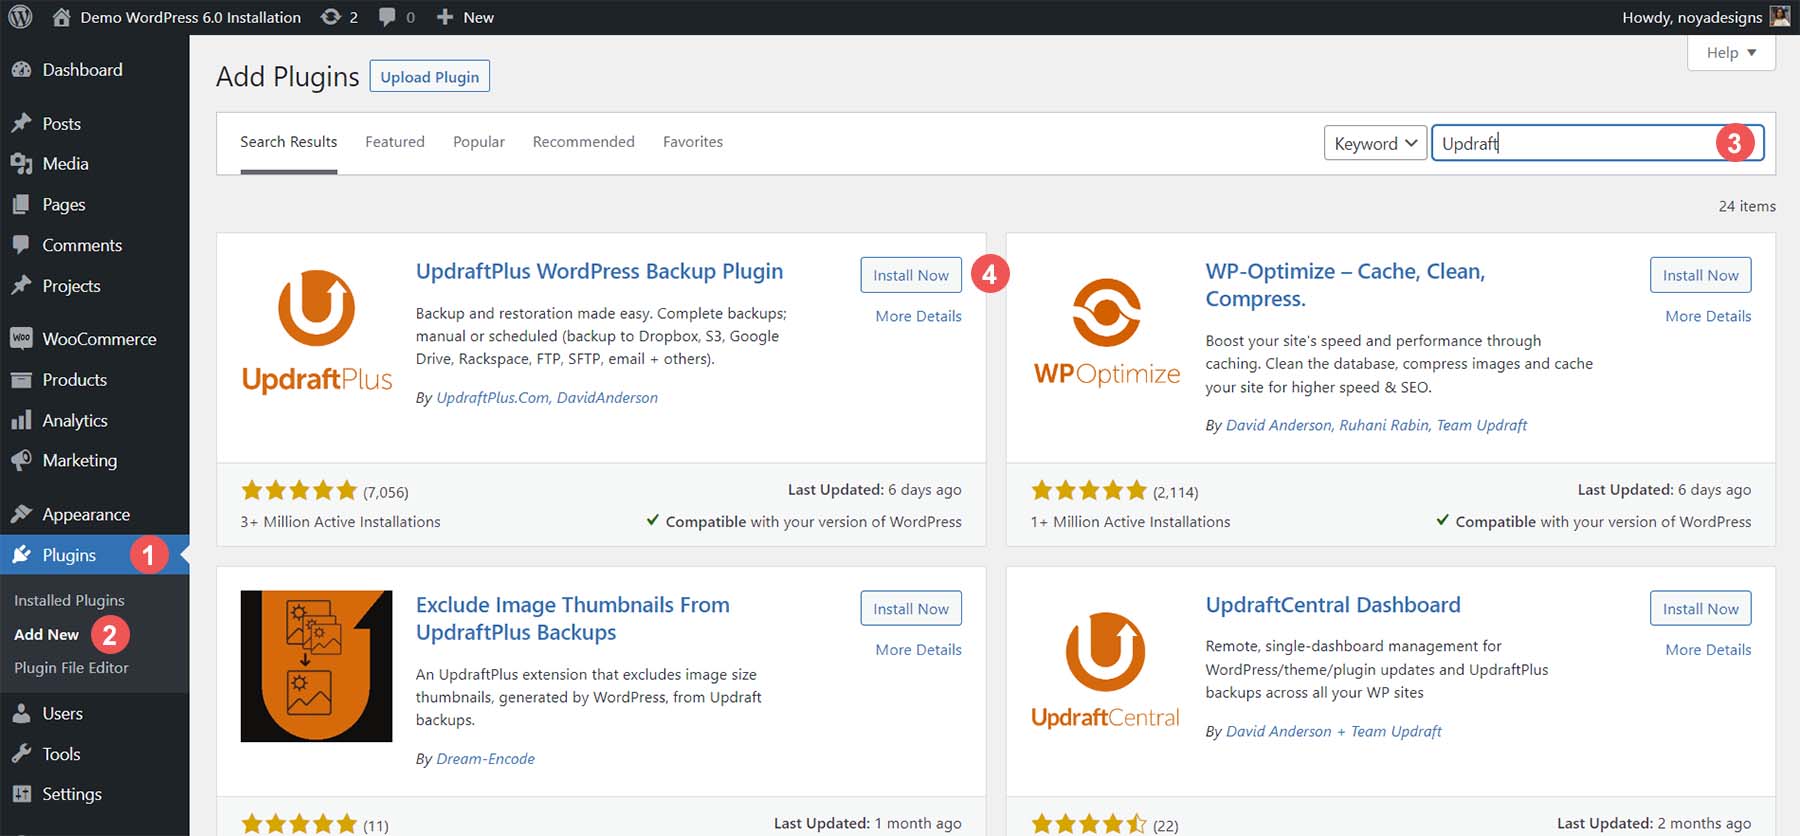 Installing UpdraftPlus, a WordPress backup plugin